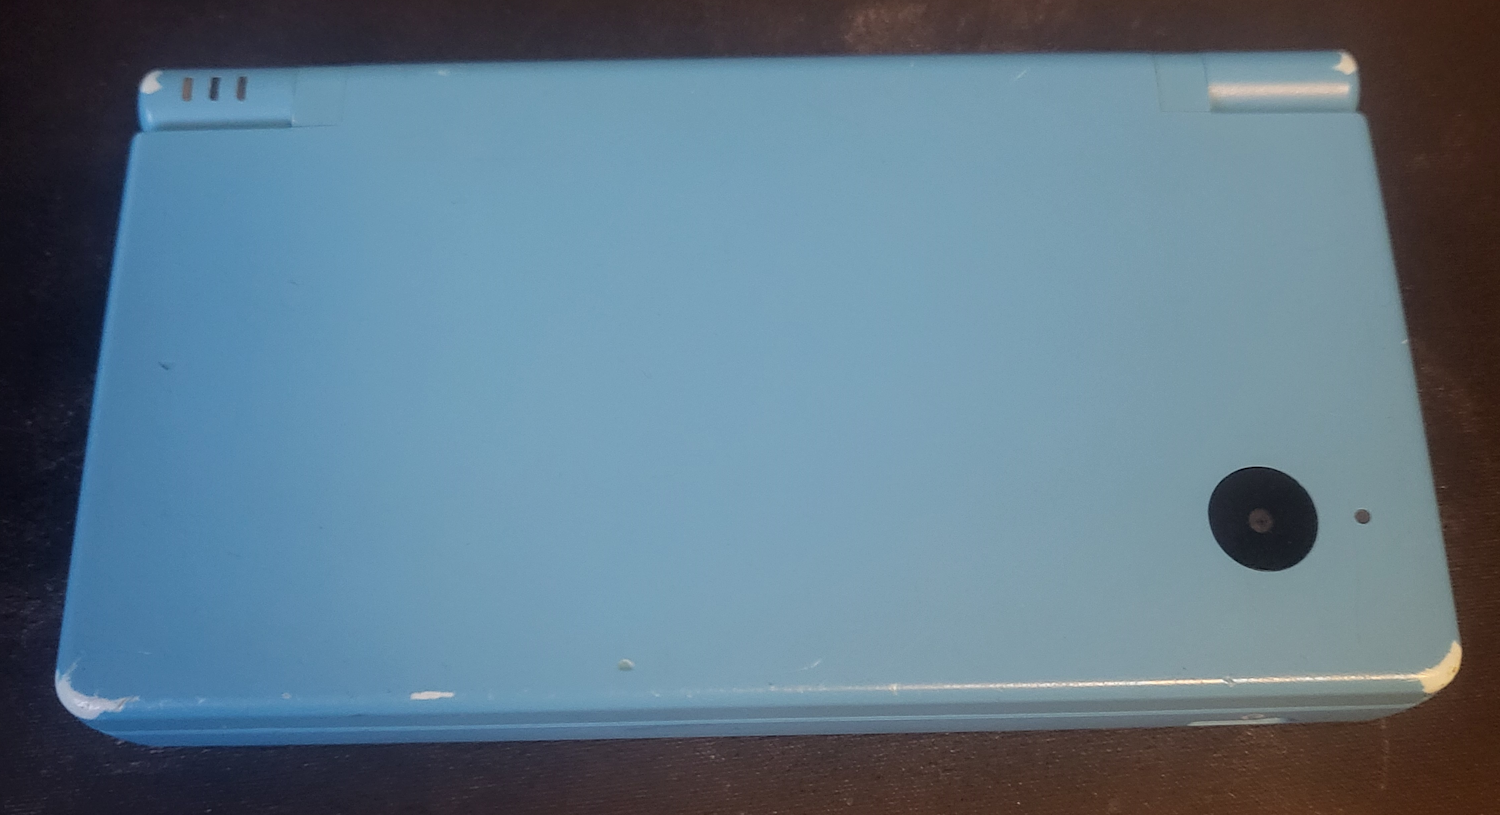  Nintendo DSi Blue Console [KR]